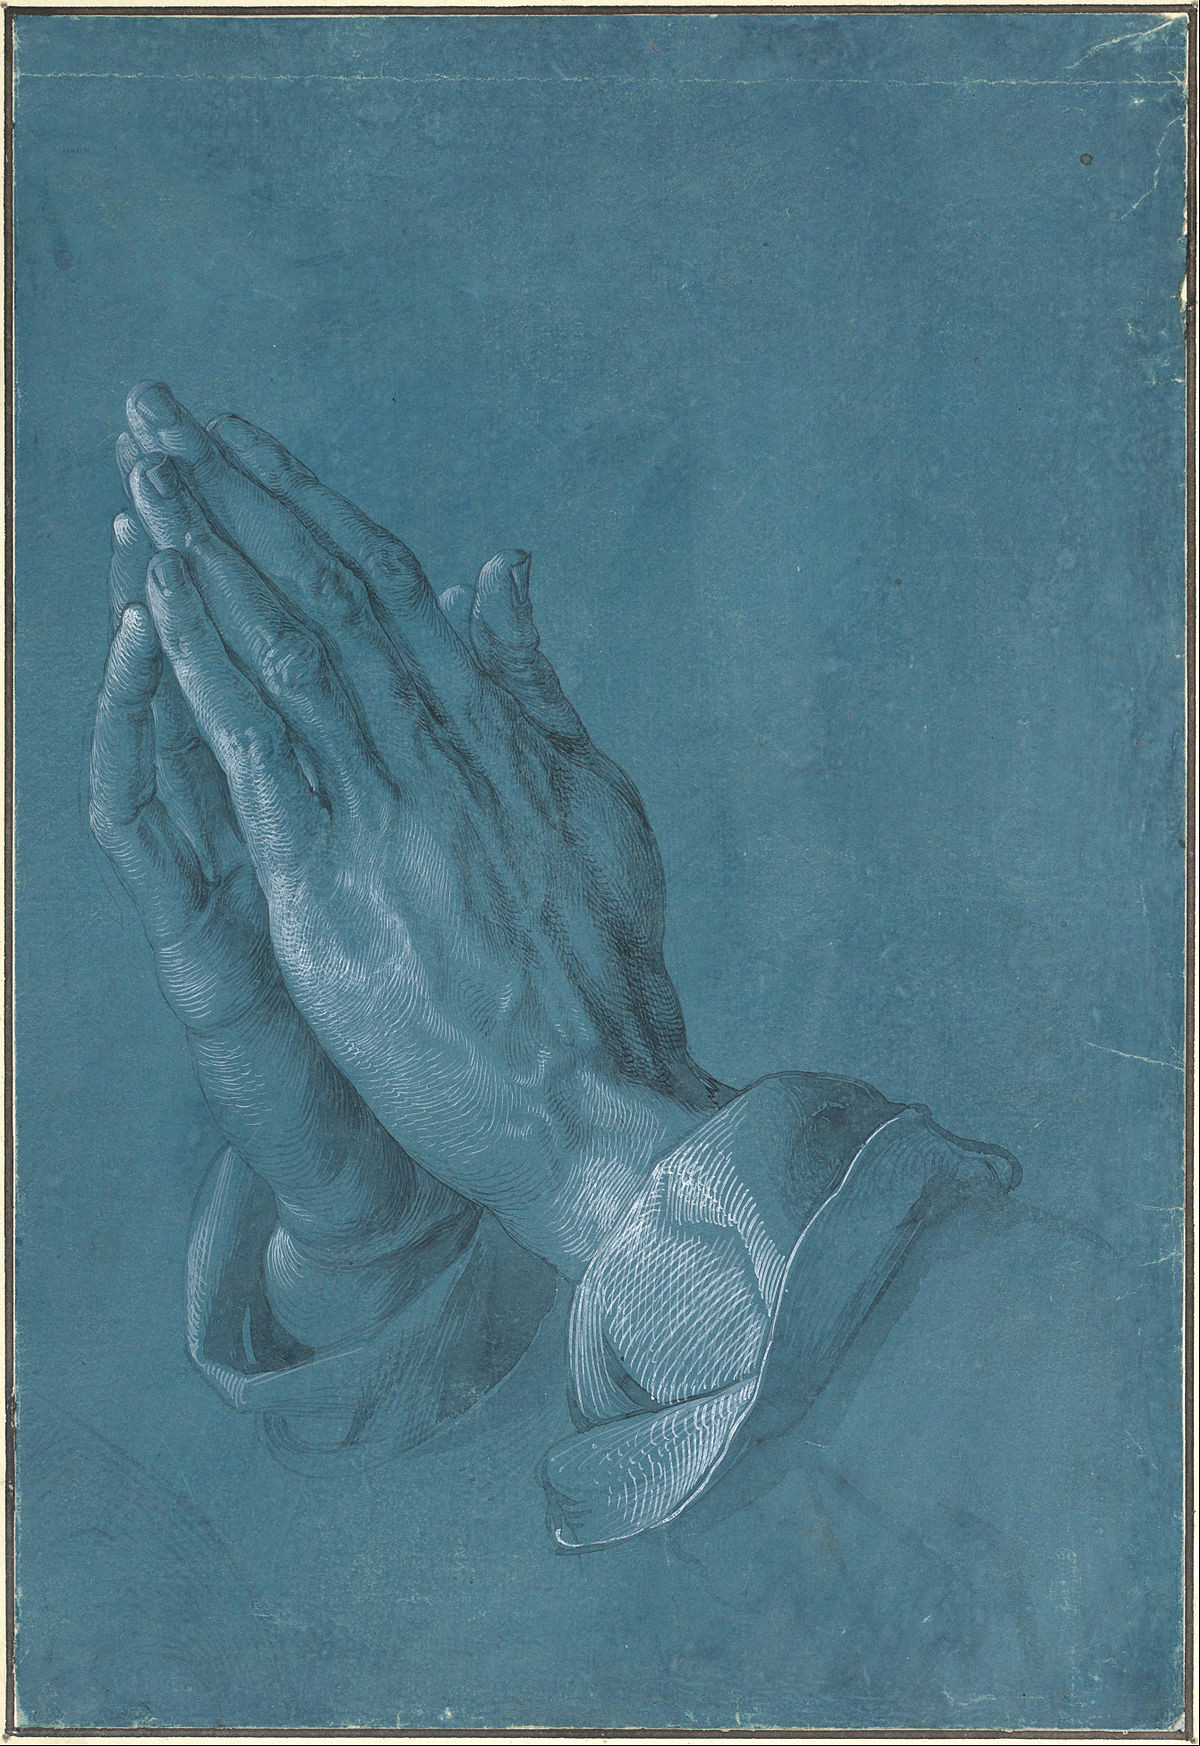 Drawings Of Prayer Hands Praying Hands Durer Wikipedia